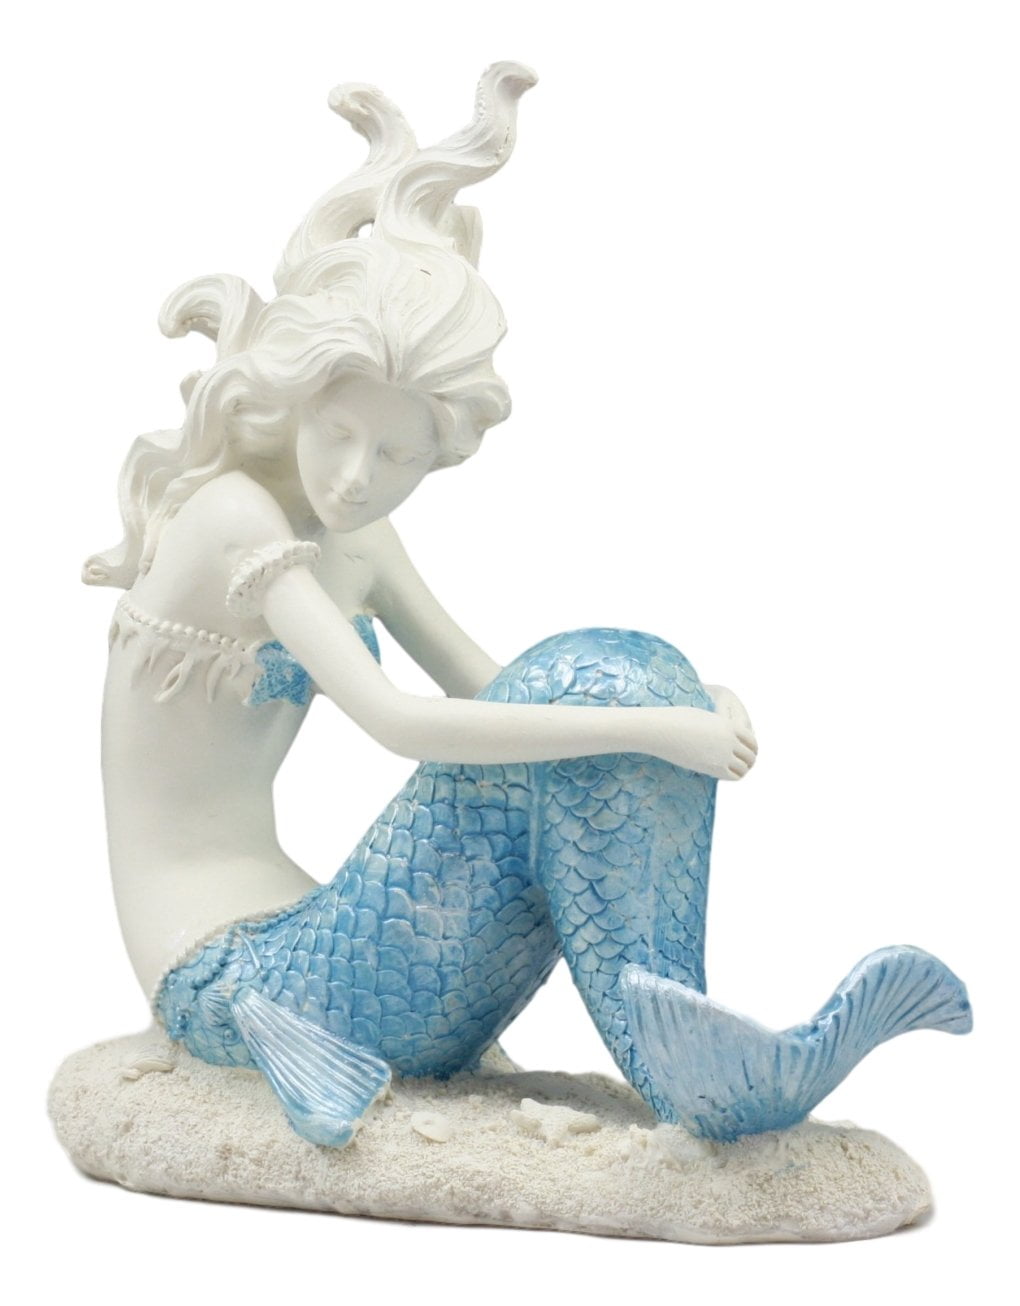 B Mermaid in the surf holding a Starfish Fantasy figurine 